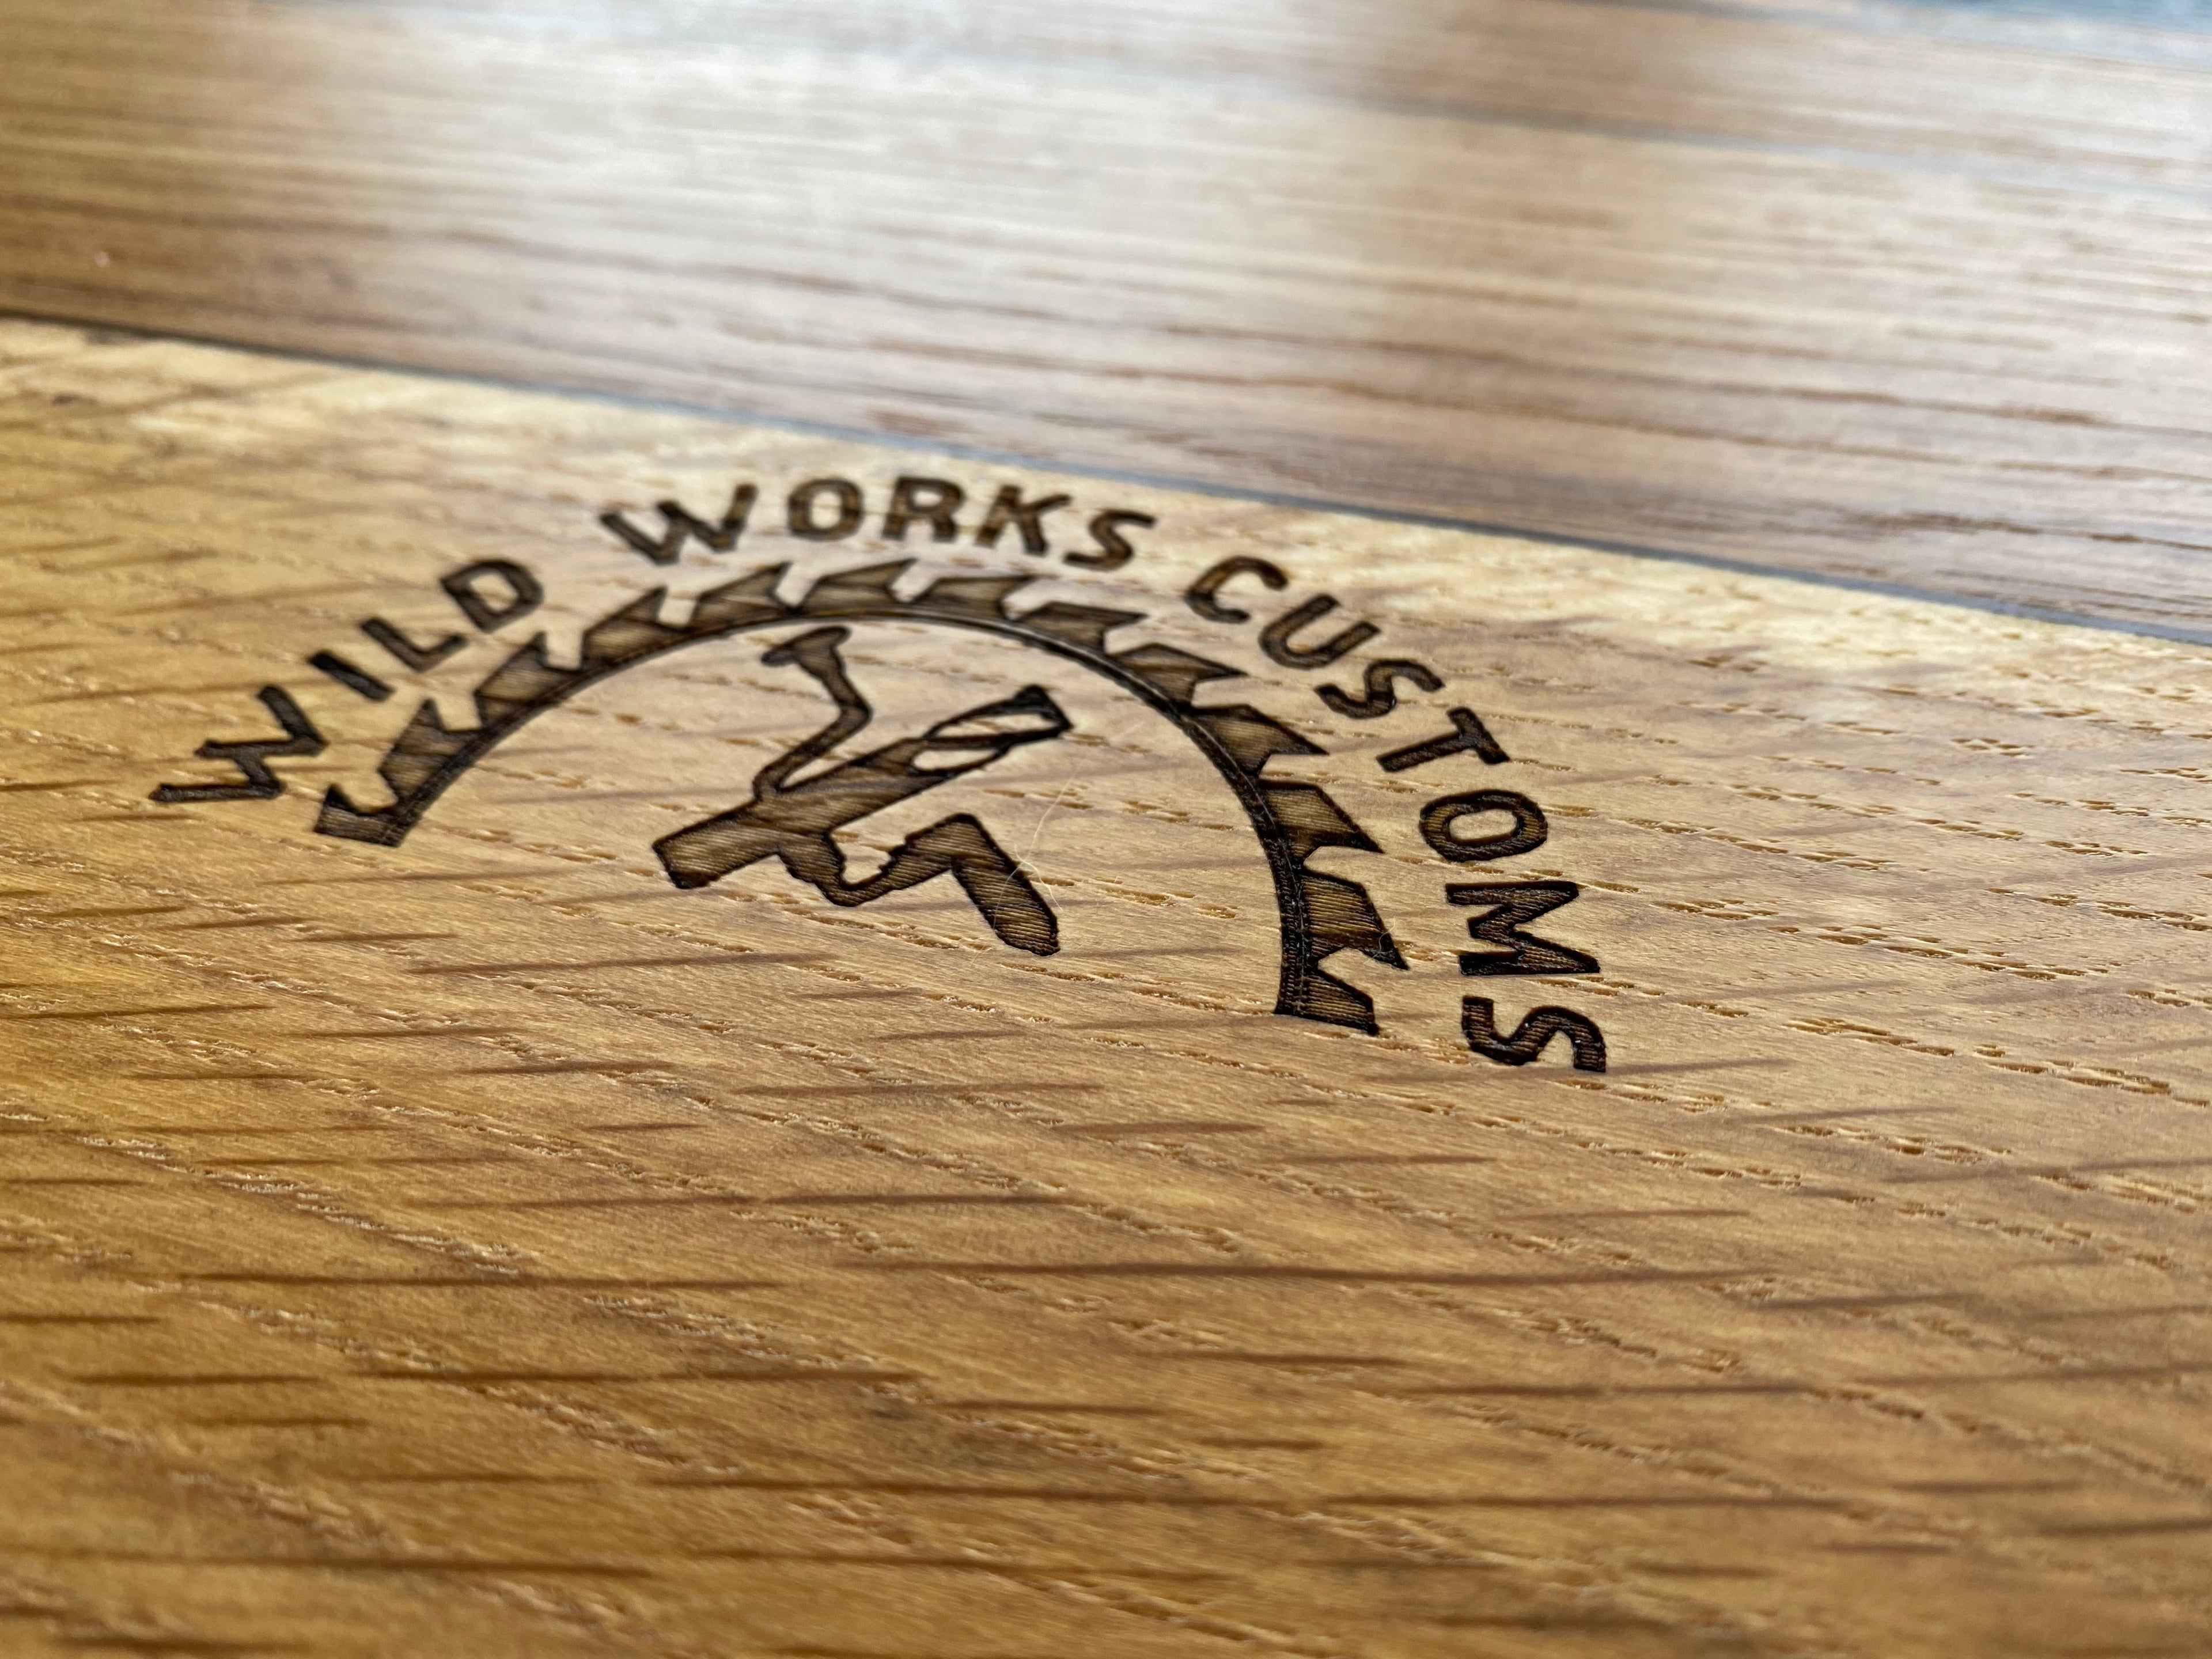 Wild Works Customs Laser Engraving